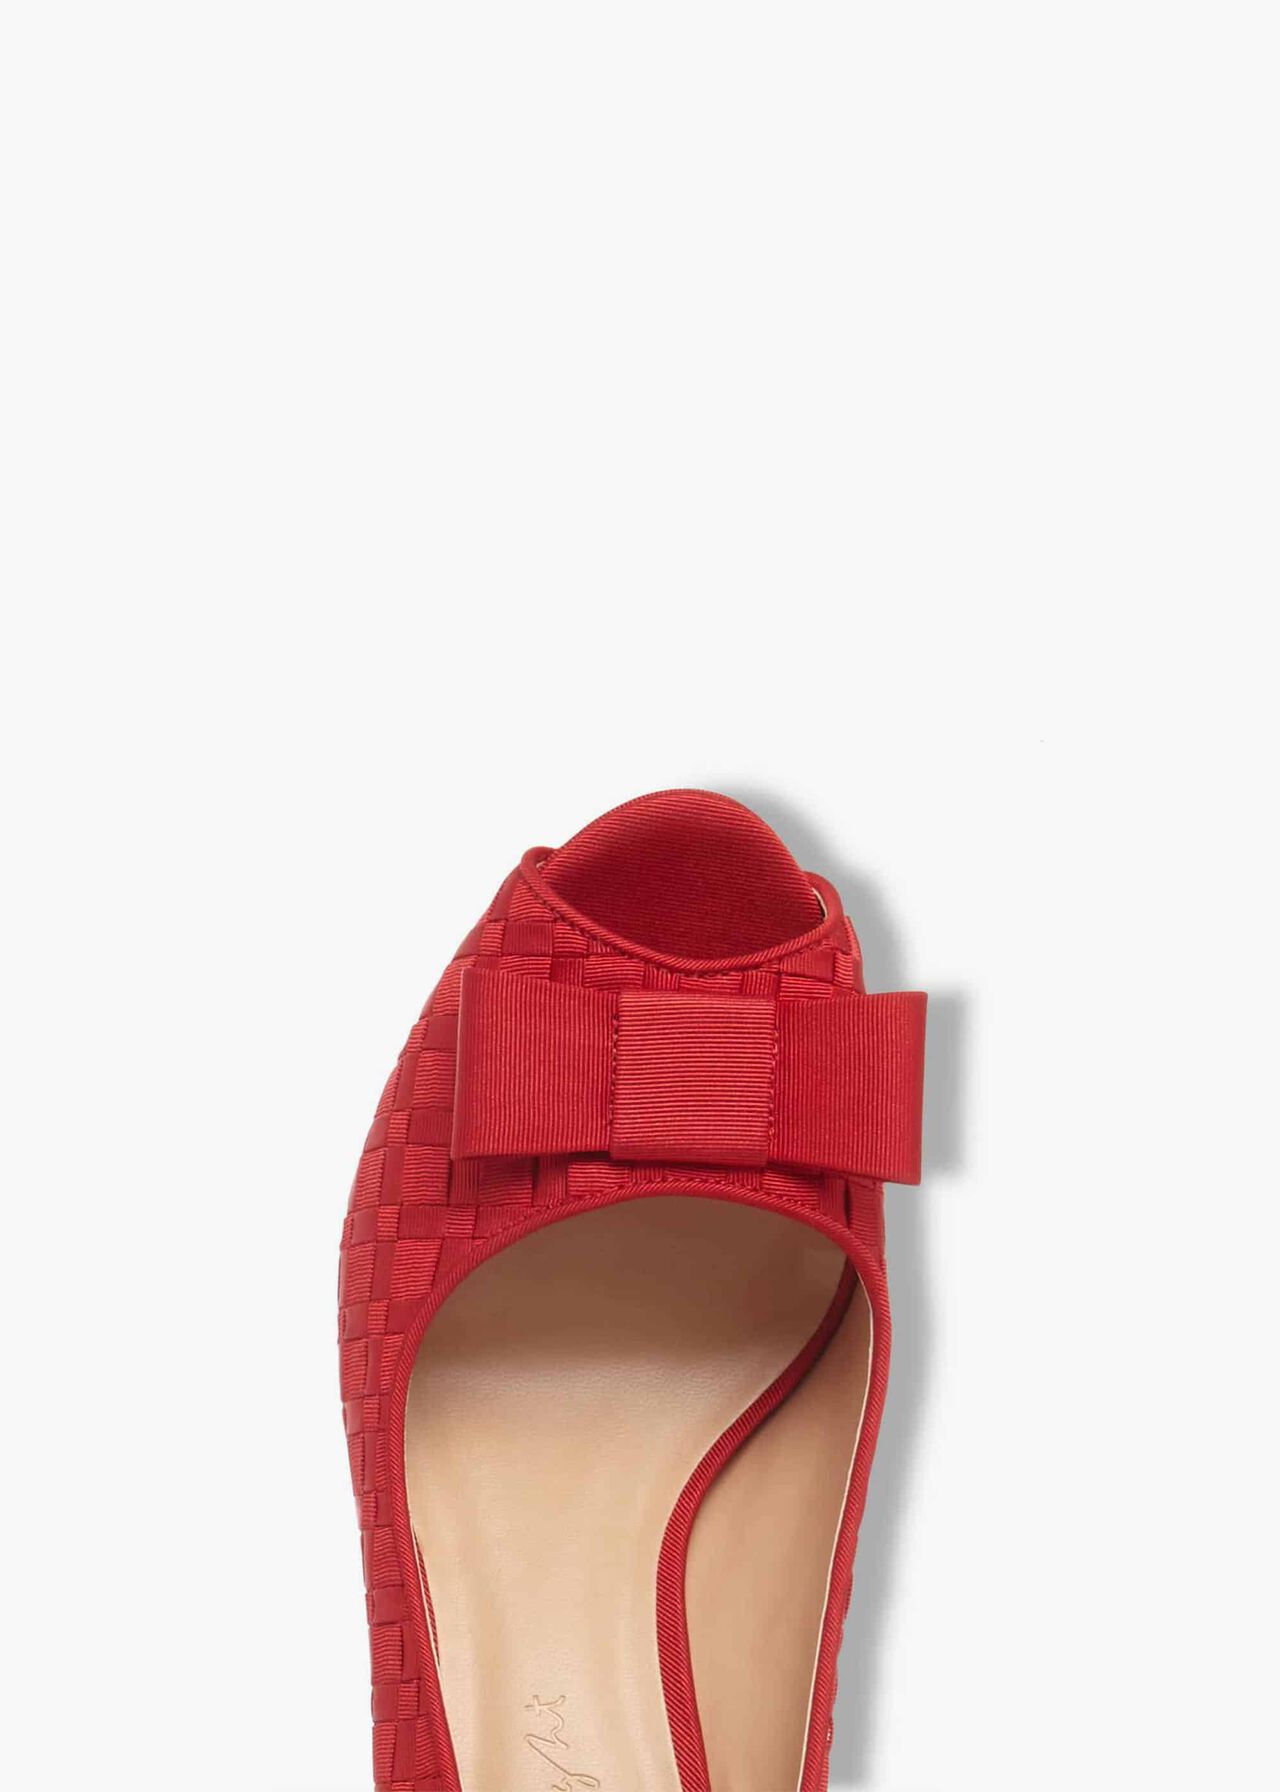 Clio Weave Peep Toe Shoes